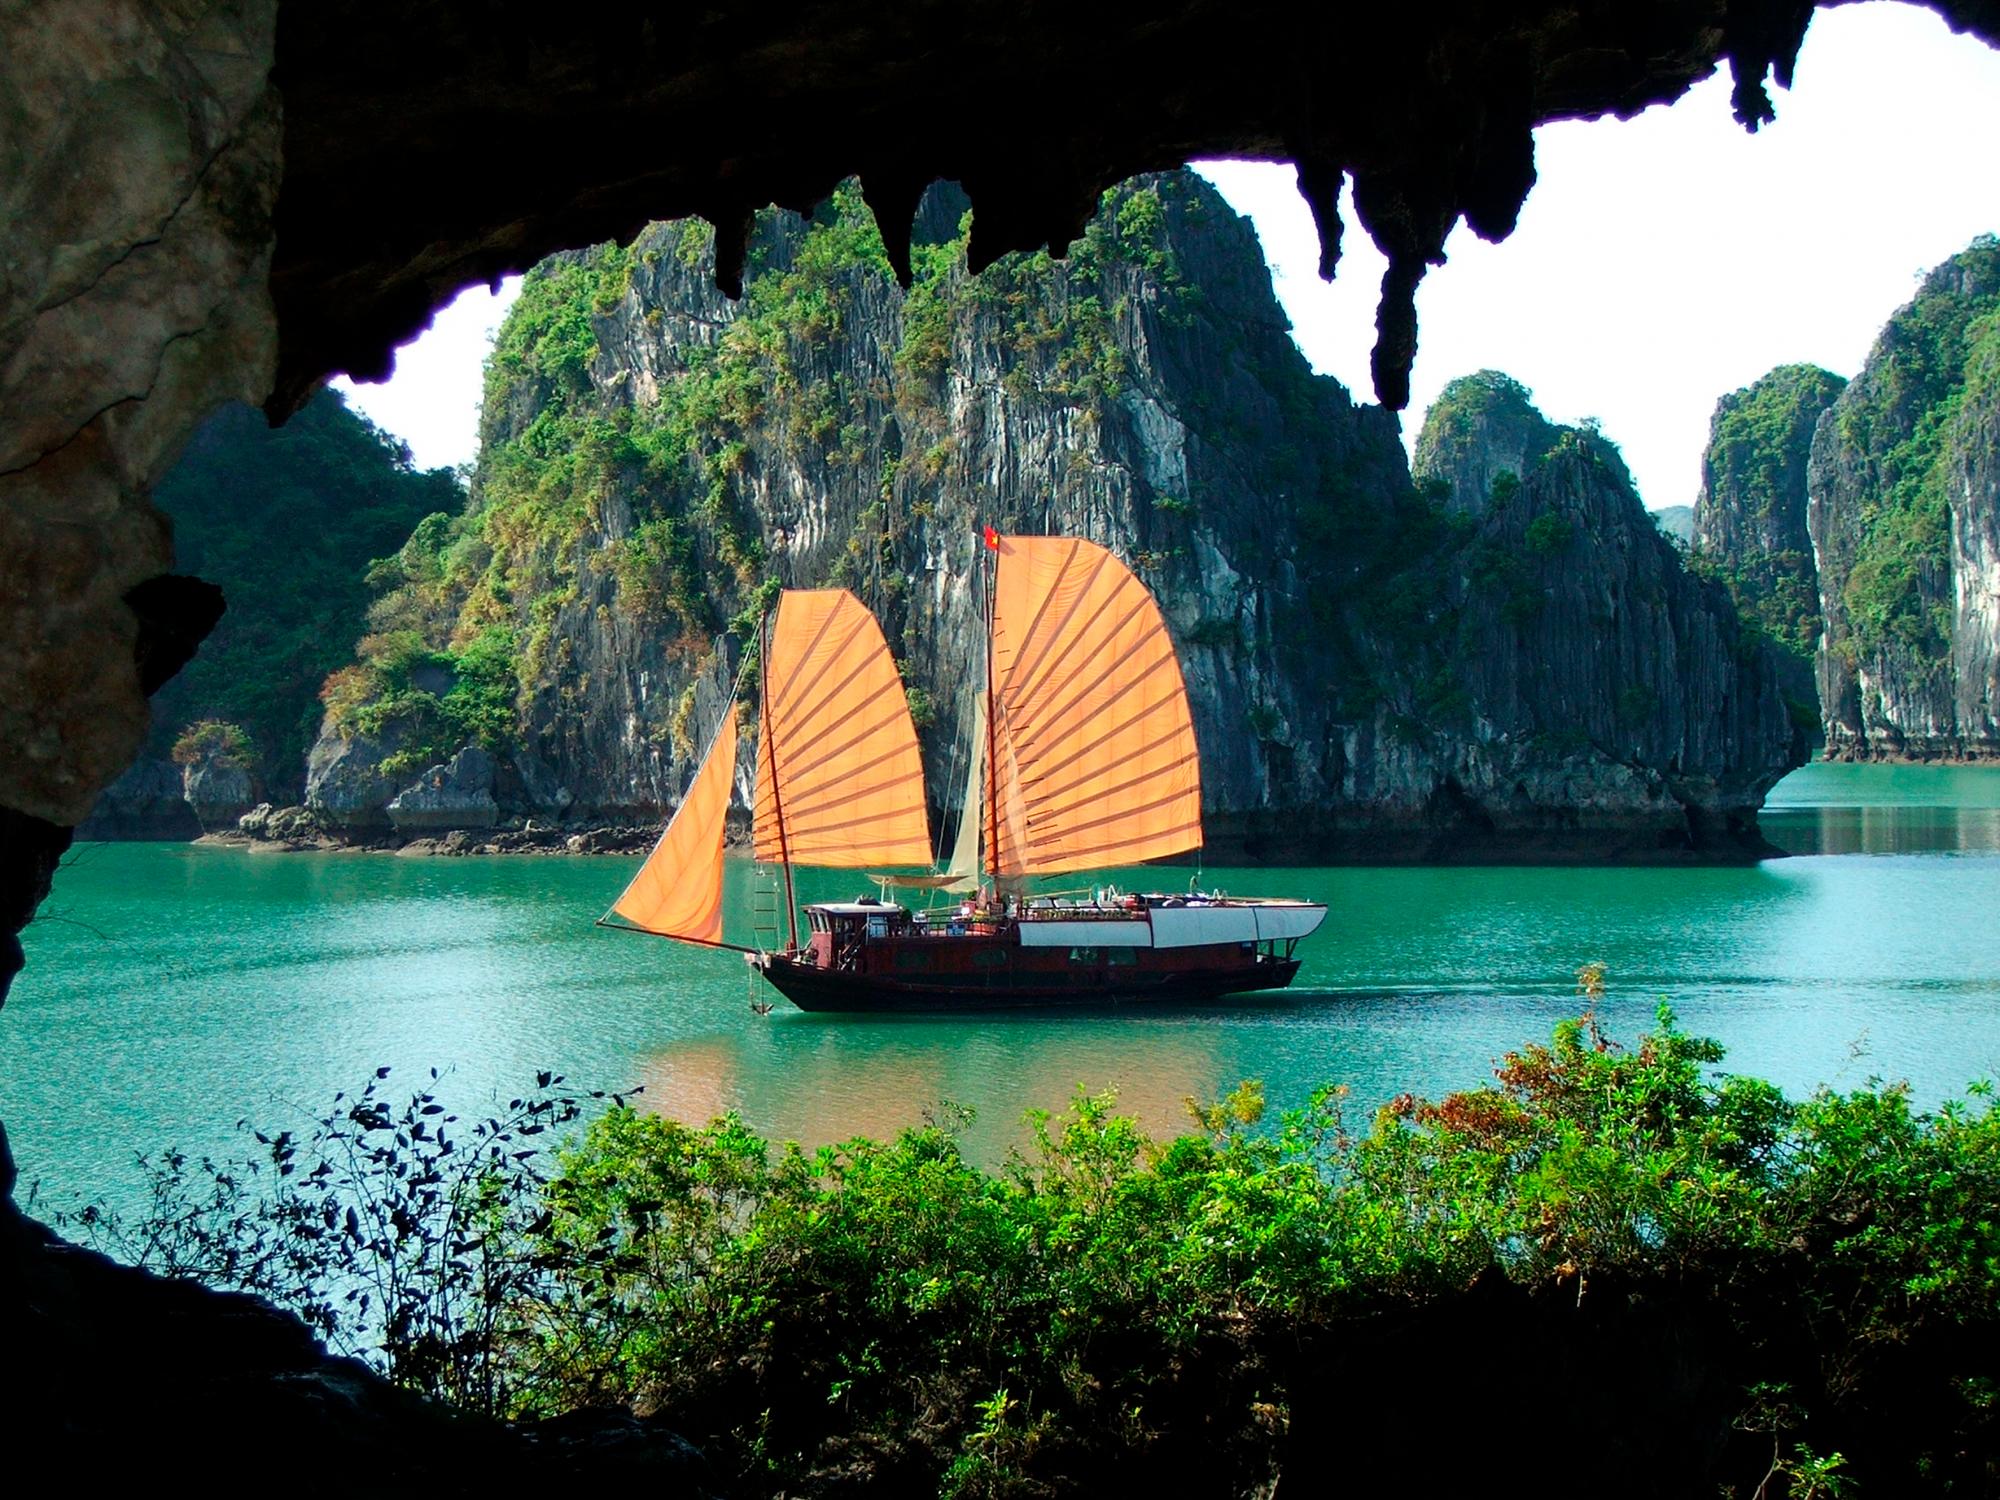 Una embarcación de las habituales que navega por la provincia vietnamita de Quang Ninh, donde se ubica la bahÌa de Ha Long.